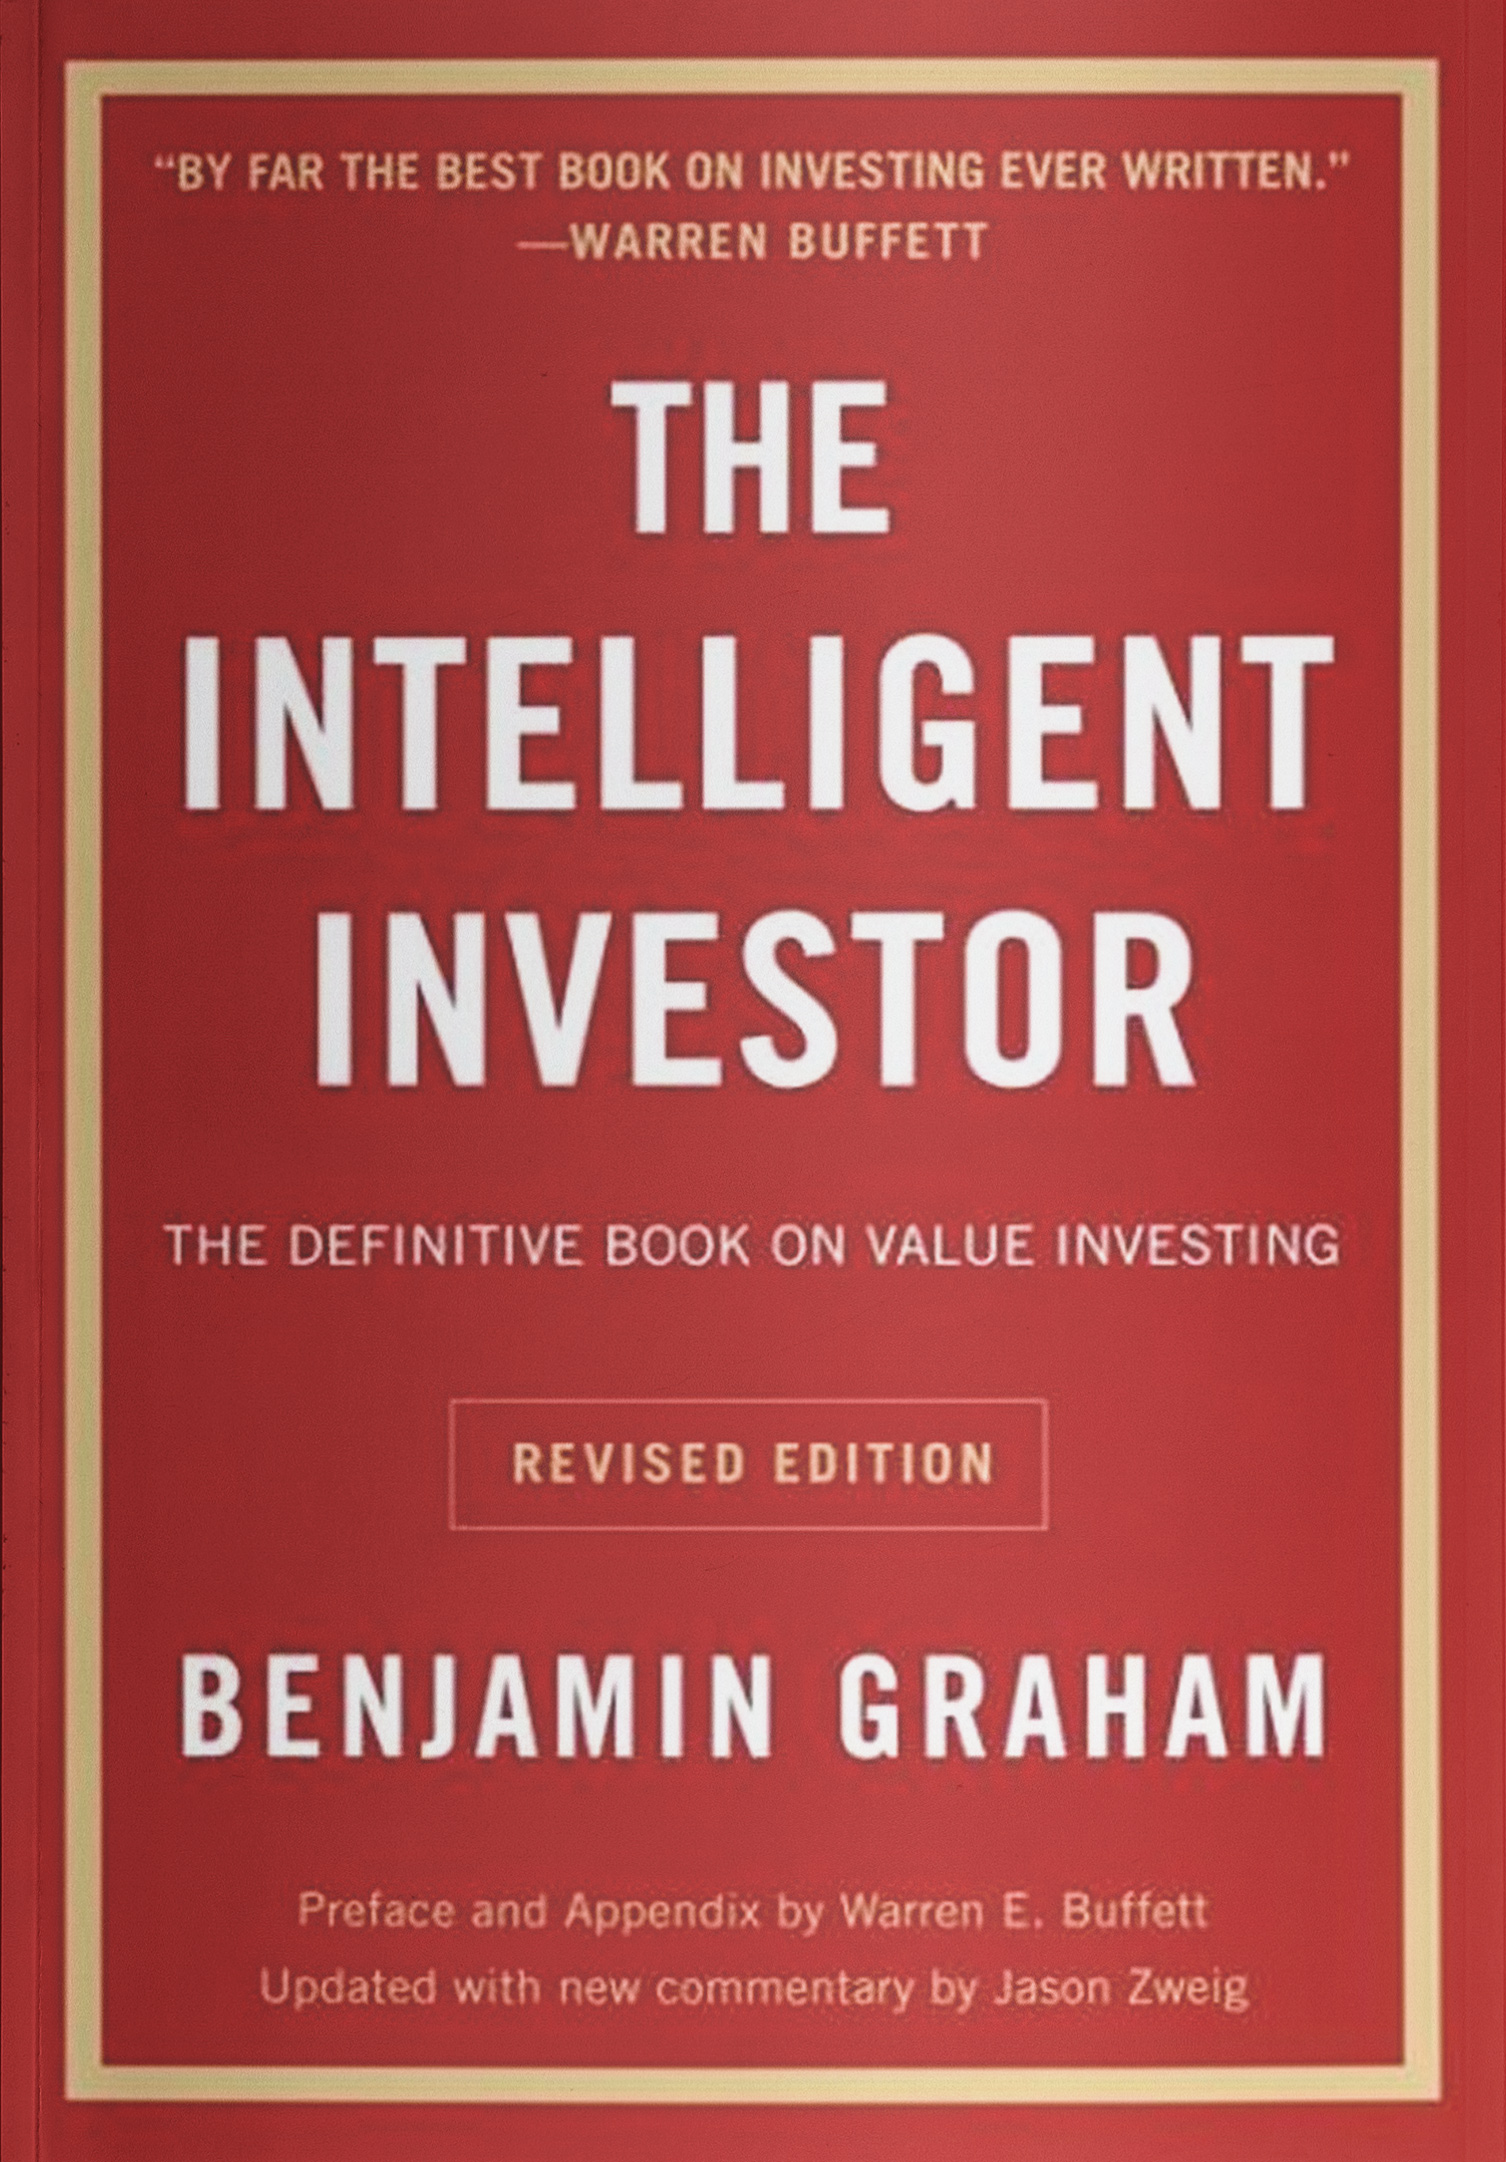 Value Investing met Benjamin Graham